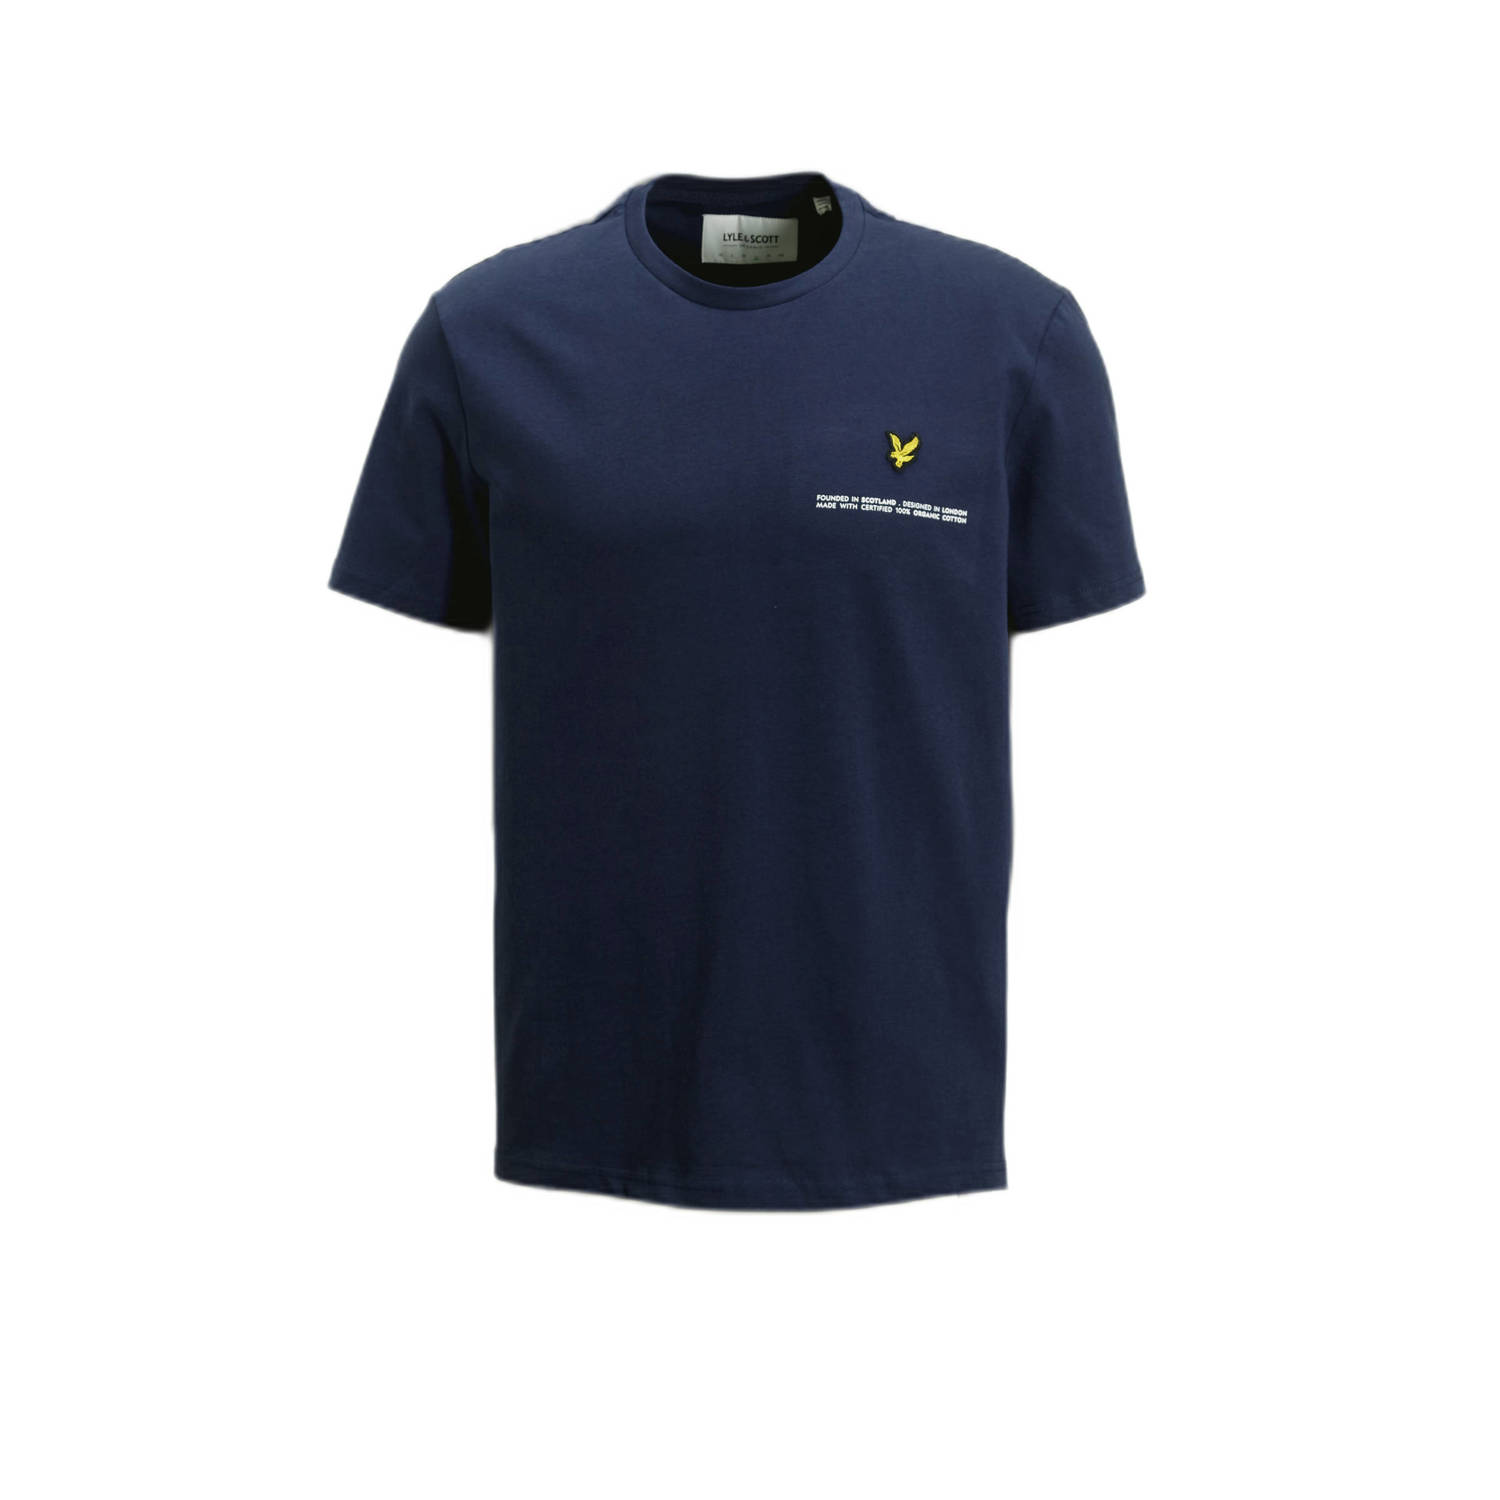 Lyle & Scott T-shirt met logo navy